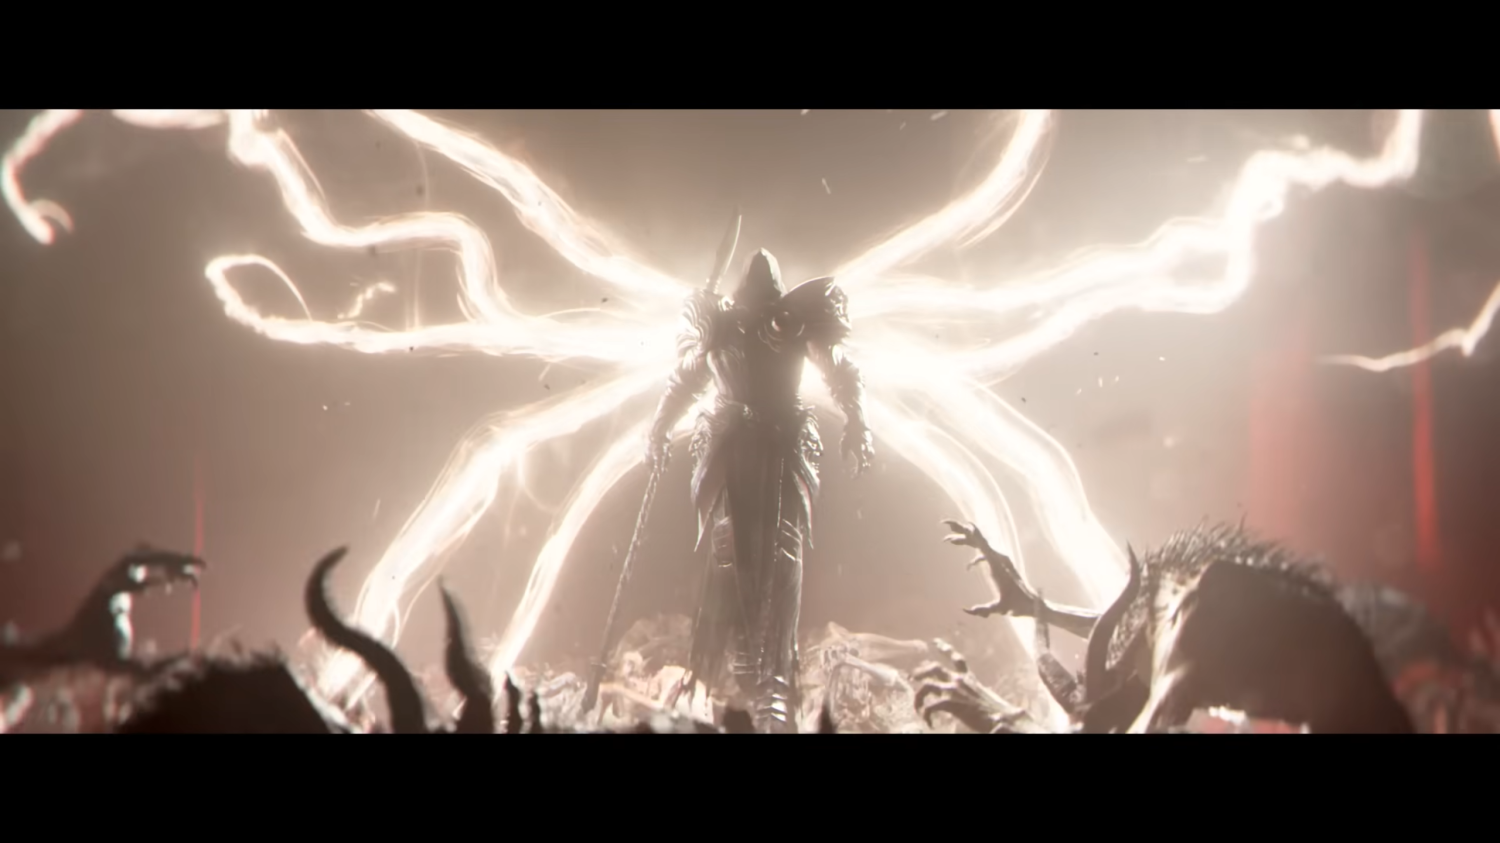 Diablo IV - Official Release Date Trailer